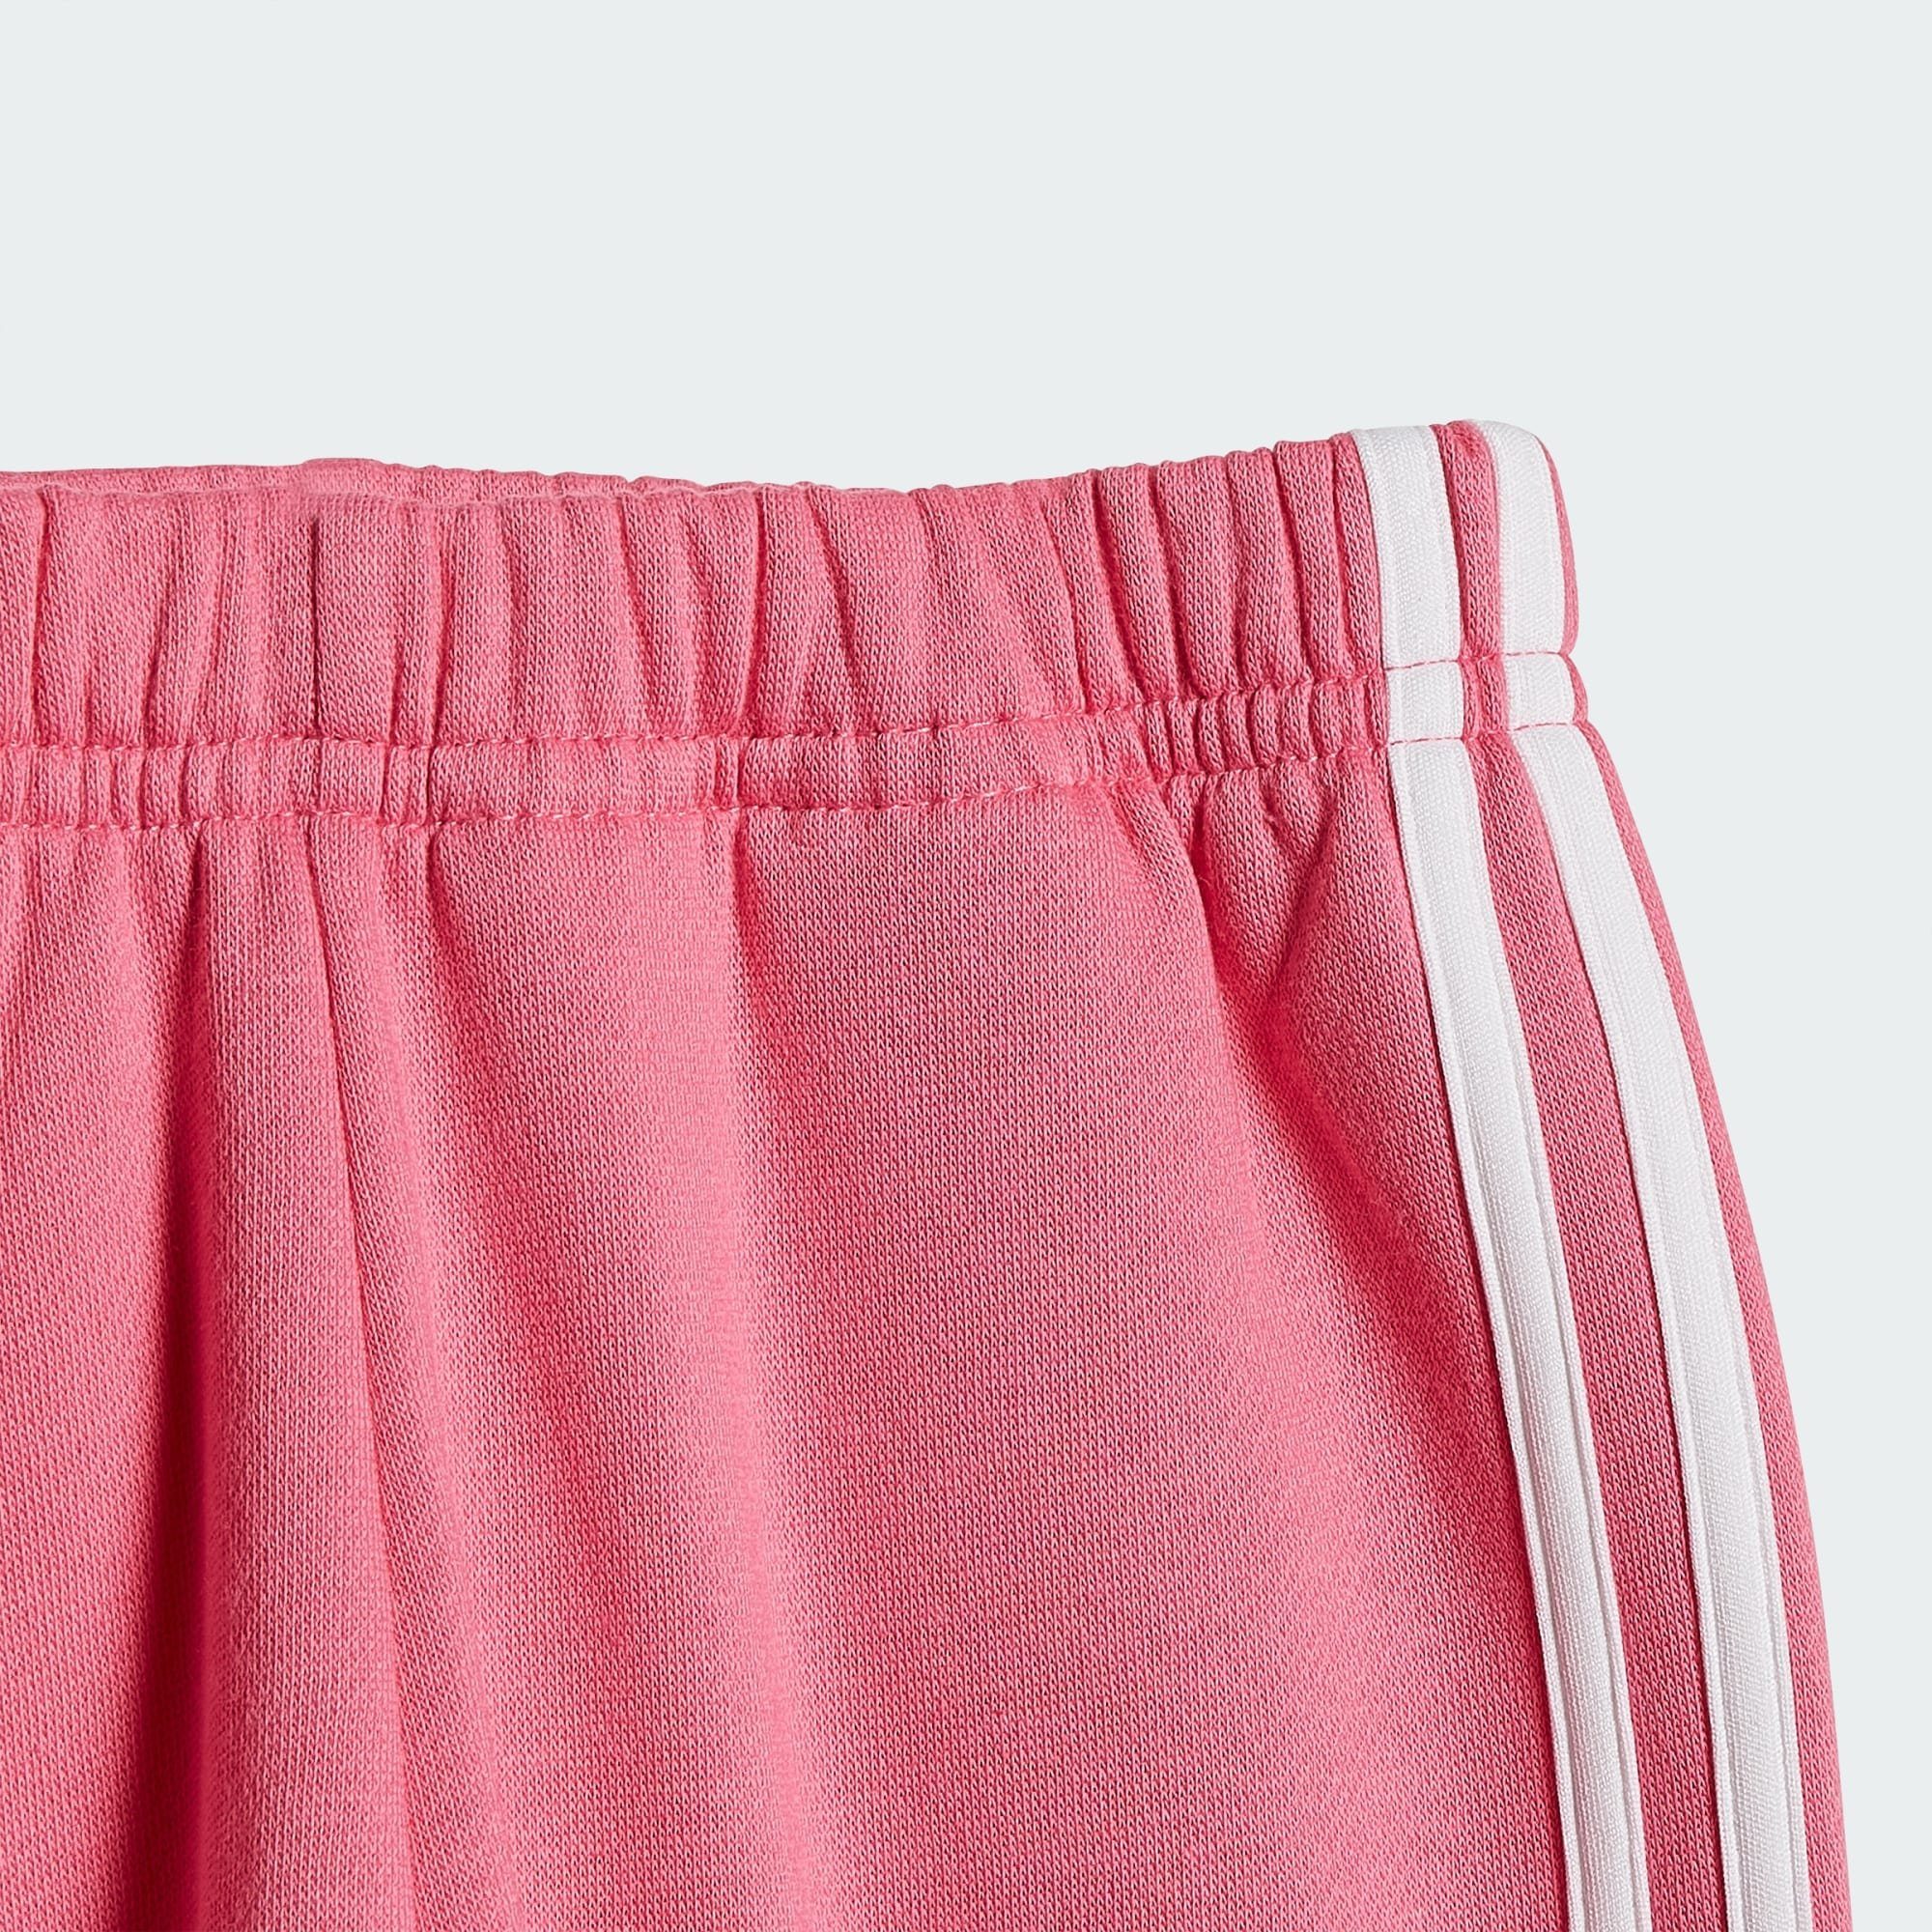 BADGE White JOGGINGANZUG Trainingsanzug OF / adidas Sportswear Bliss SPORT Pink